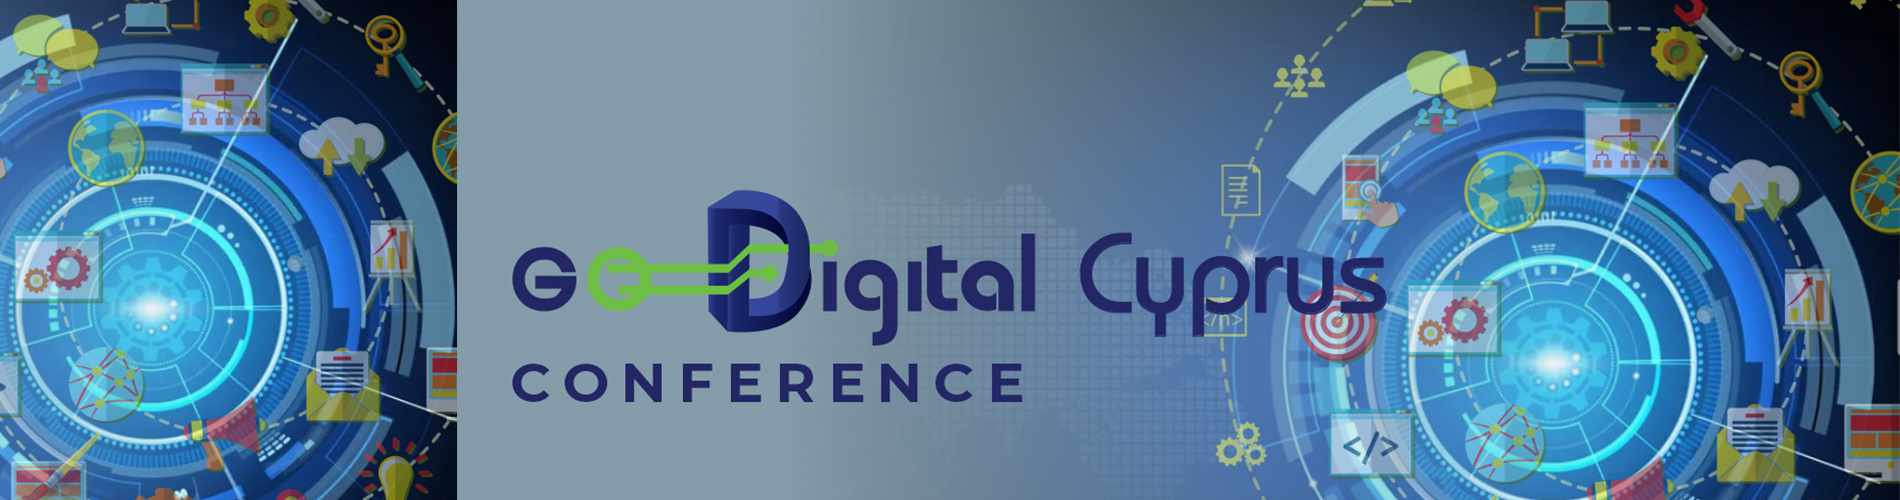 Go Digital Cyprus Conference  / 24 Σεπτεμβρίου